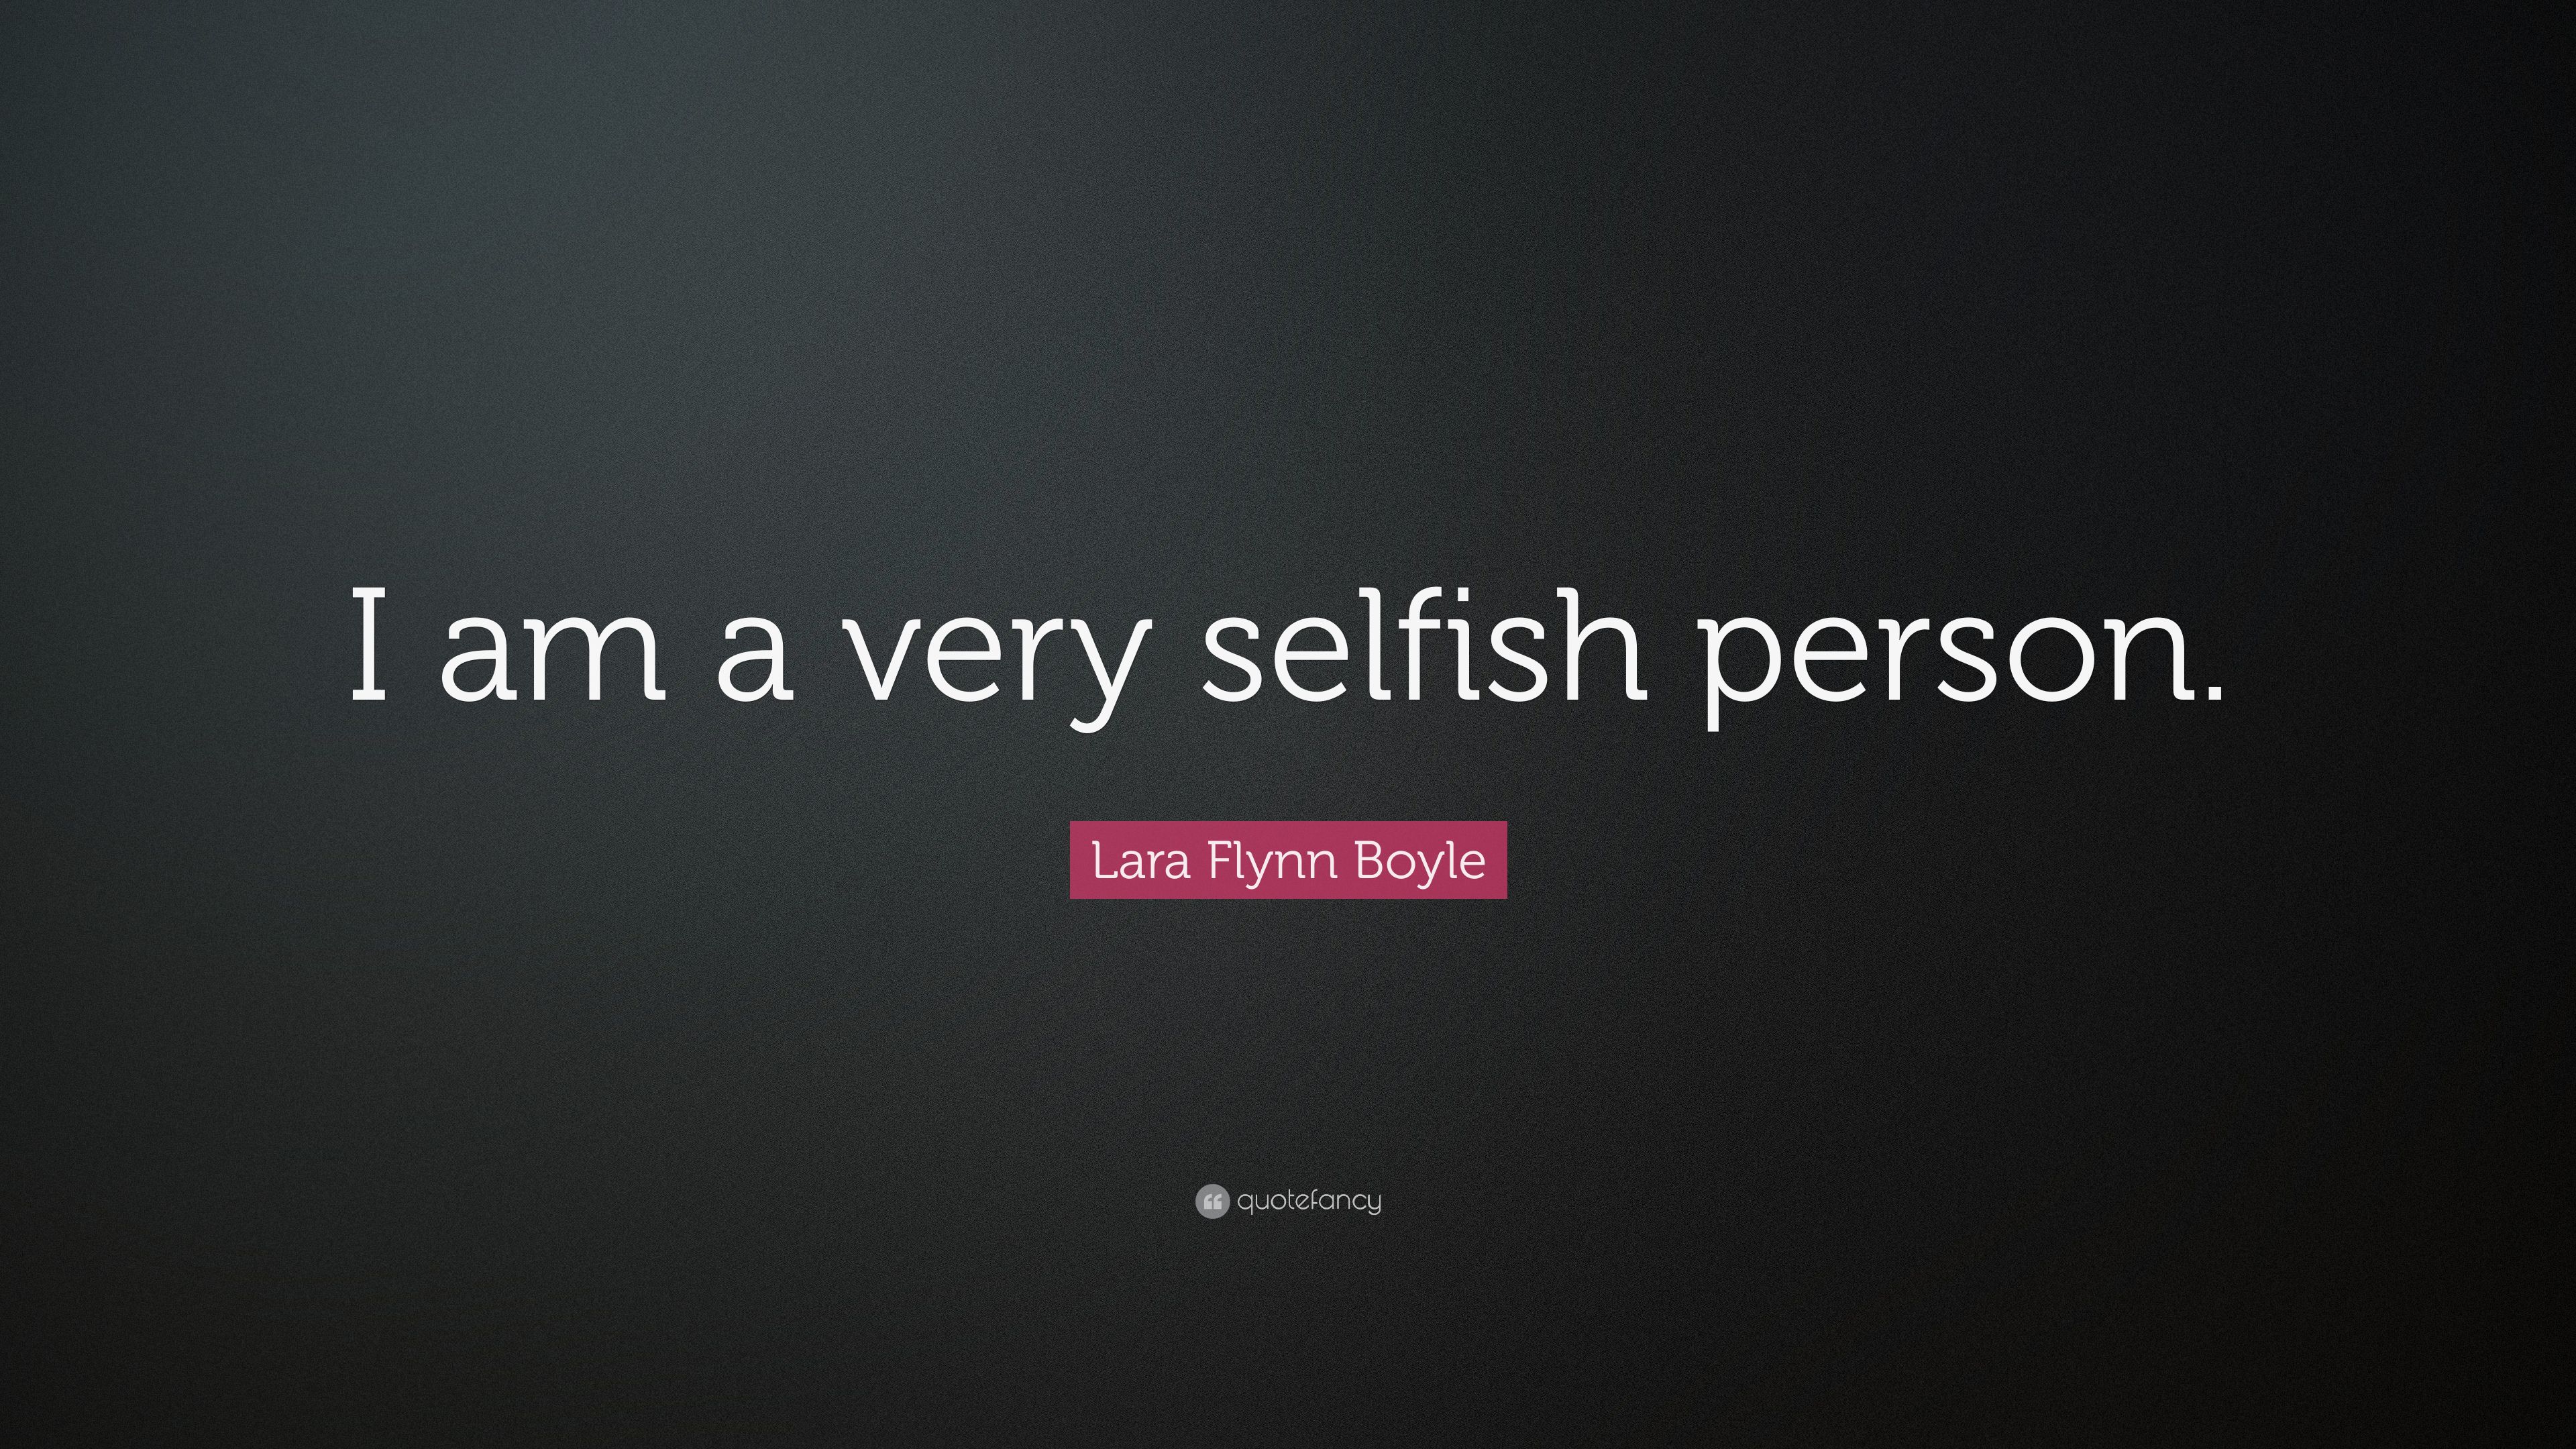 Lara Flynn Boyle Quote: “I am a very selfish person.” 7